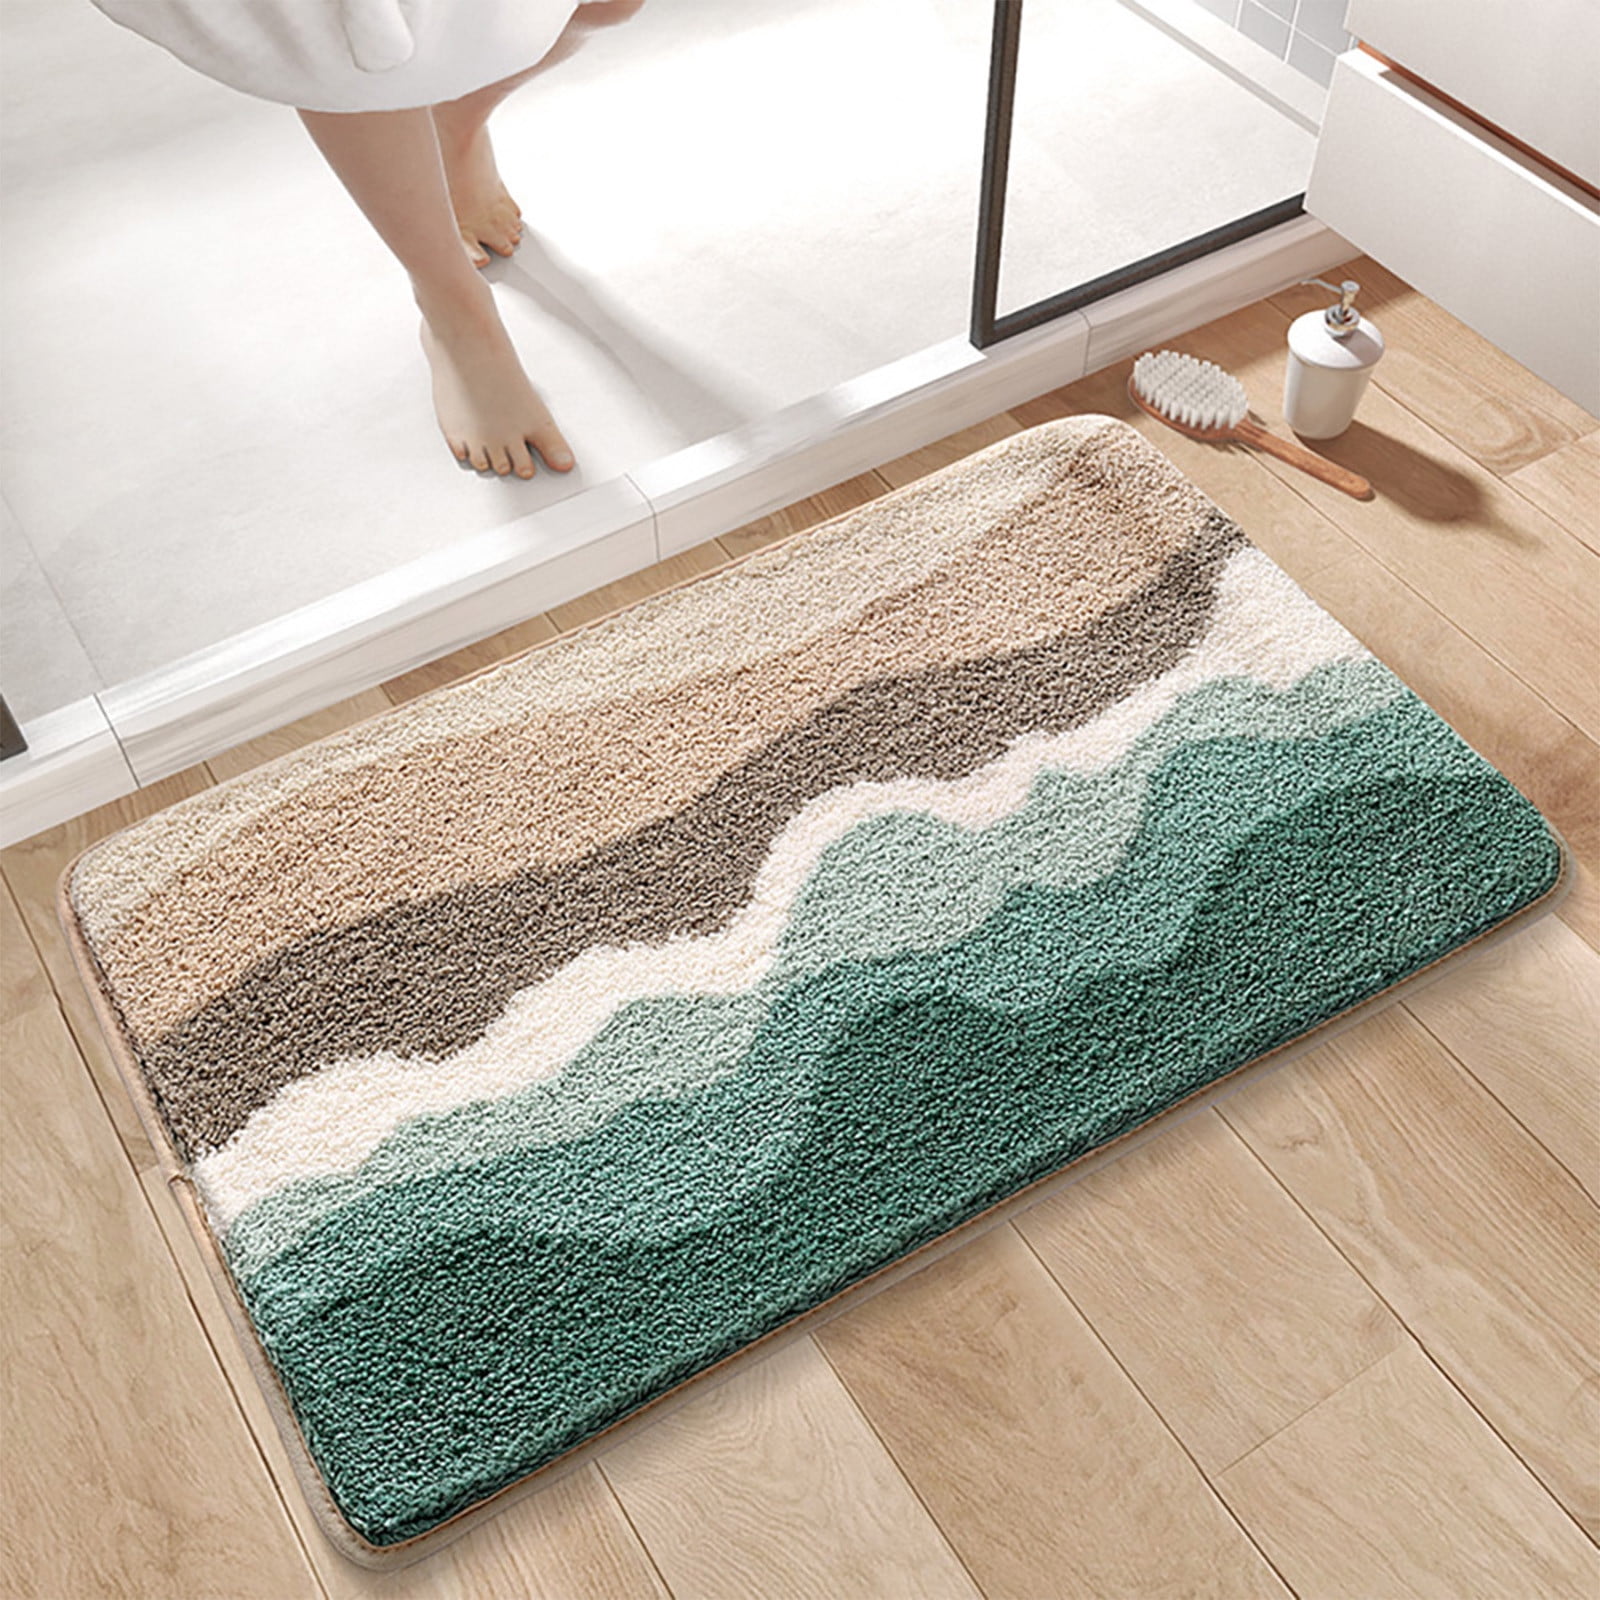 Cotton Fiber Non-Slip Bath Mats Bathroom Carpet, Super Absorbent Rugs  Bathtub Floor Mat Doormat For Shower Room Toilet 5 Sizes - AliExpress